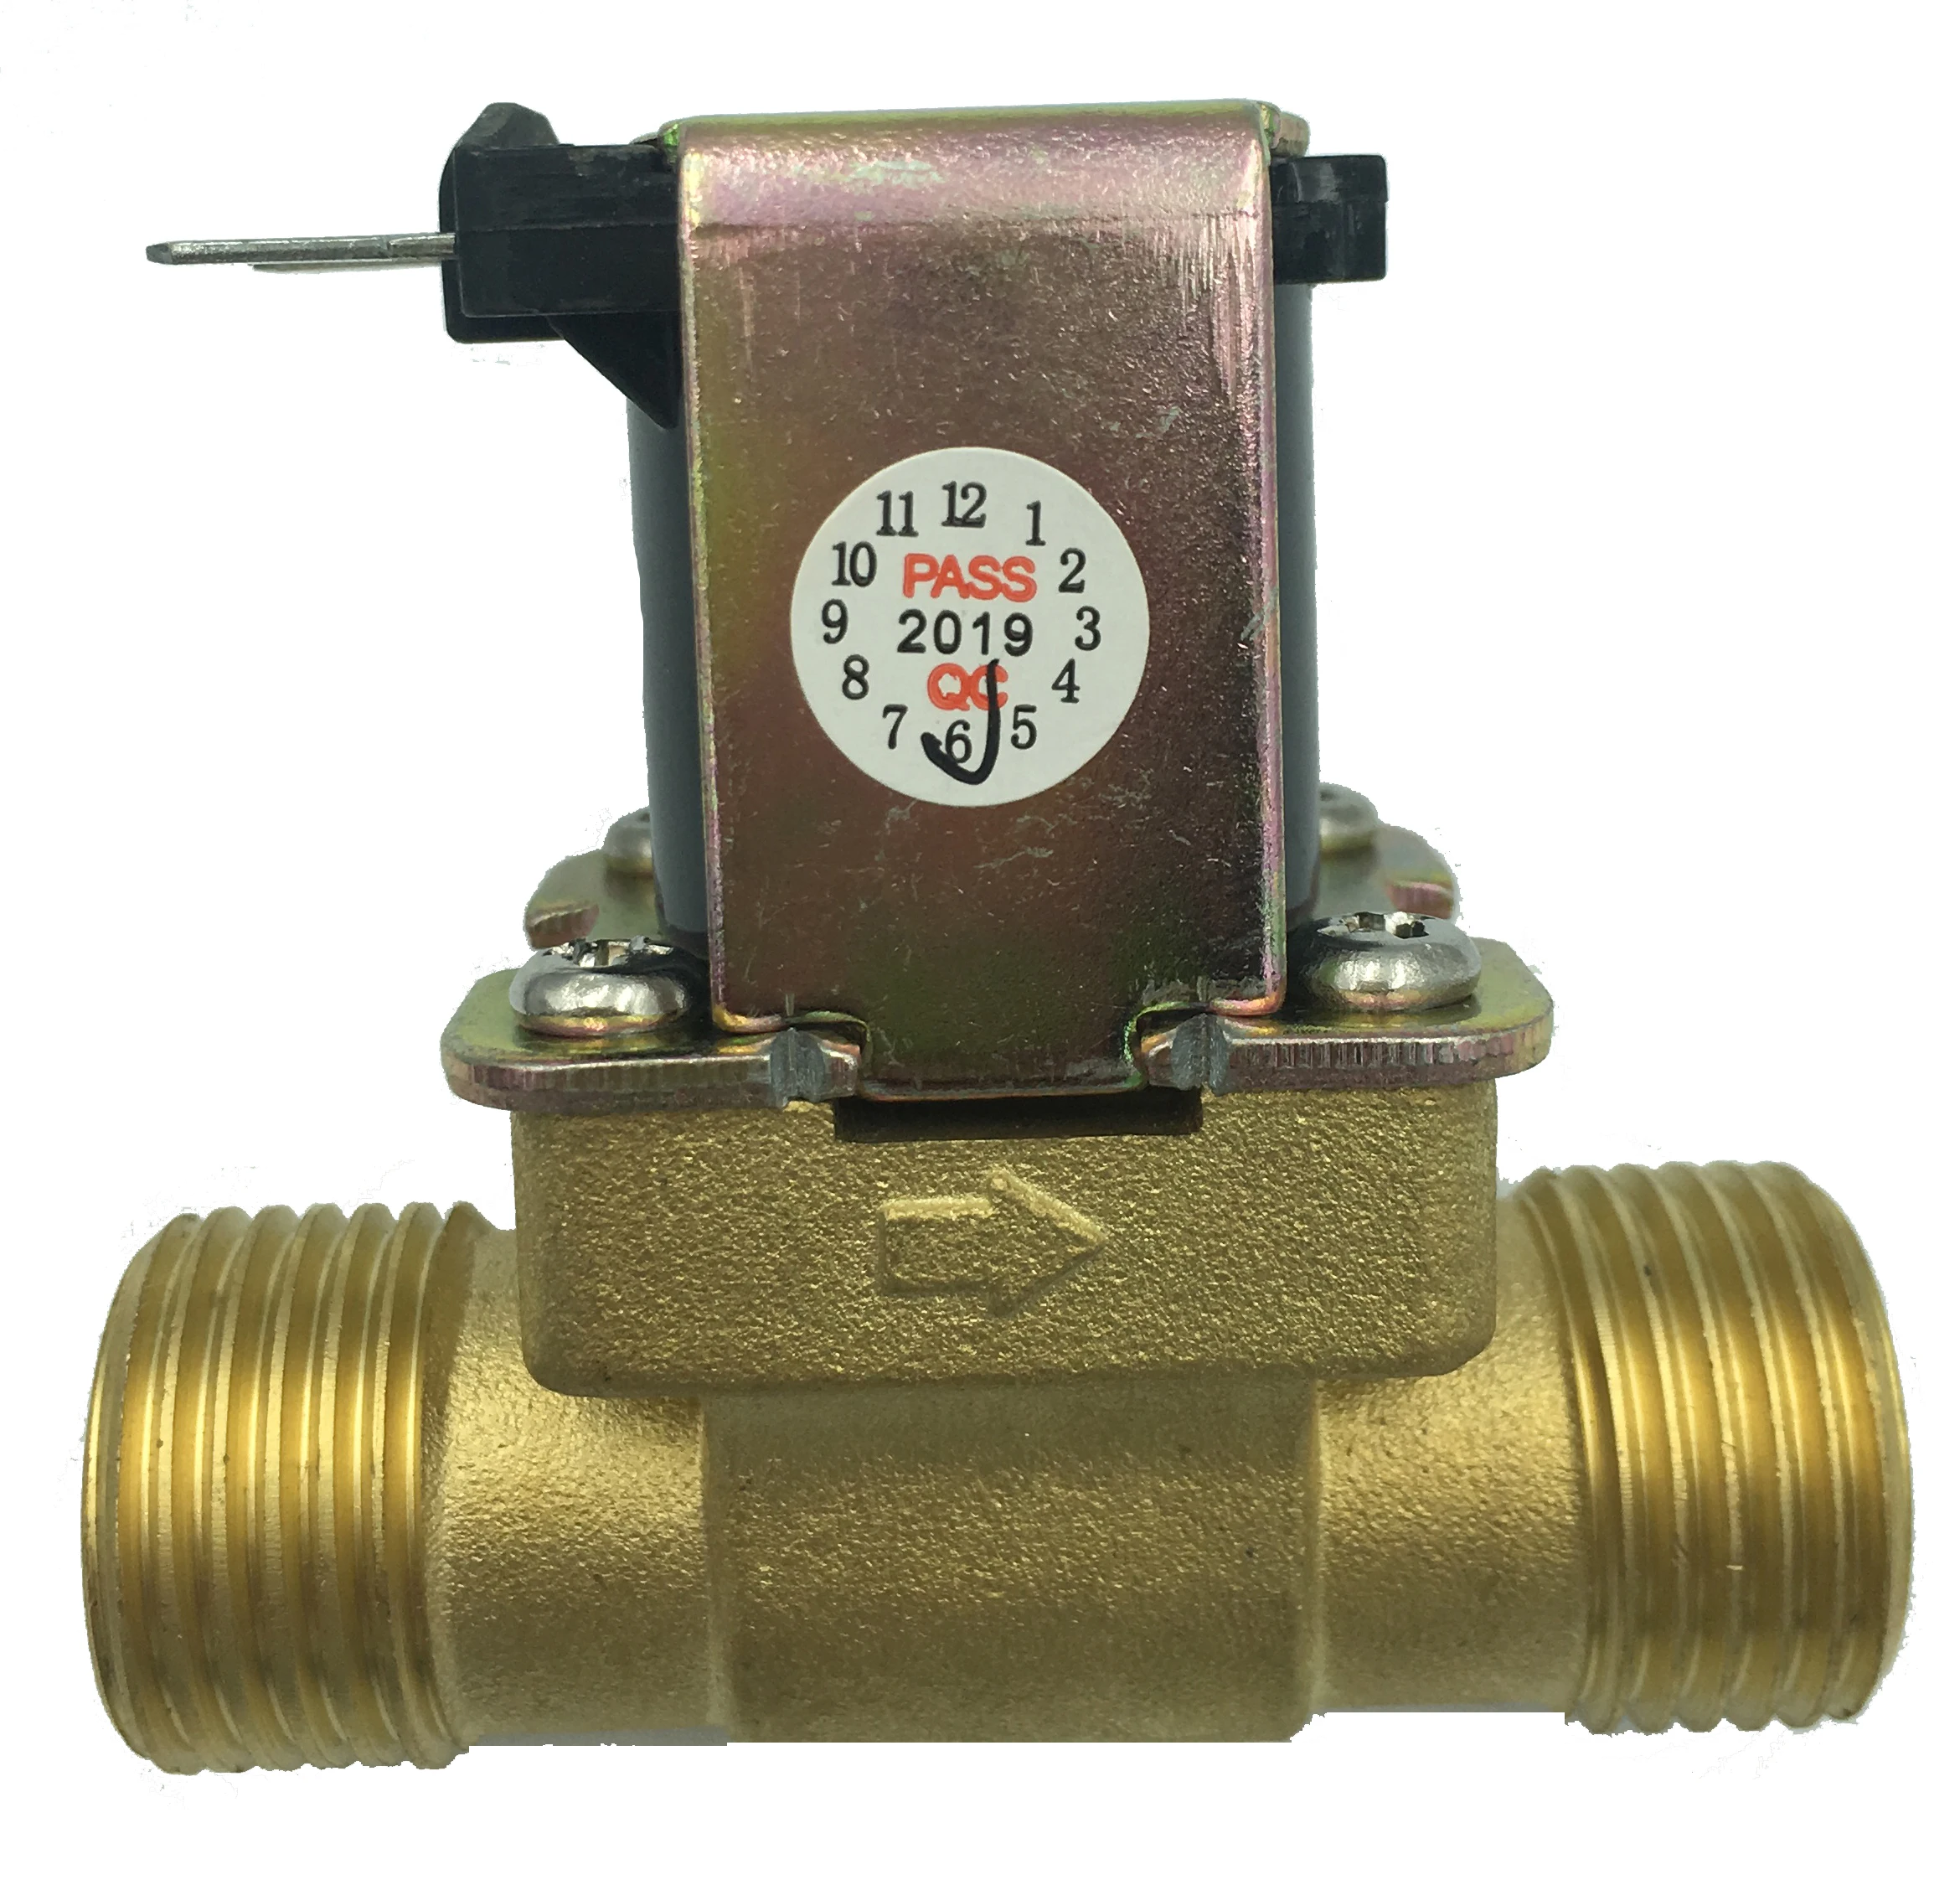 DC12V DV24V DC220V Brass Water Solenoid Valve for Hot Water Heater Control Meter 